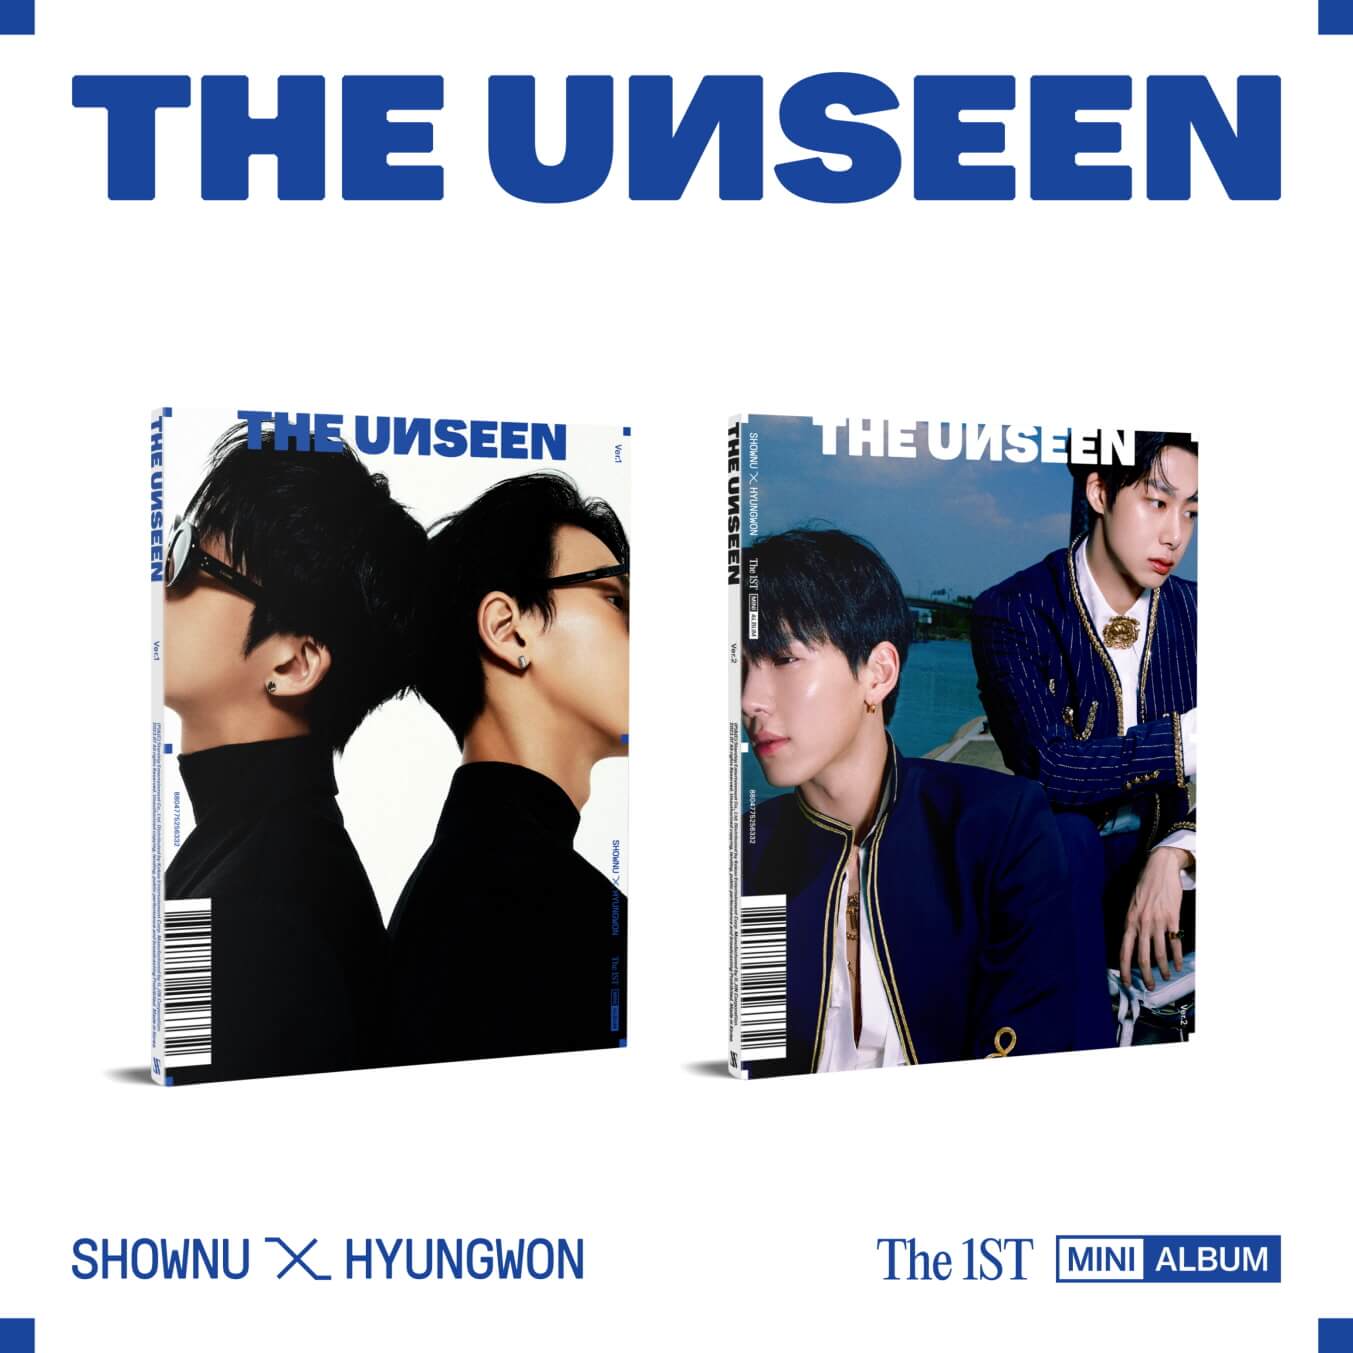 Shownu X Hyungwon 1st Mini Album THE UNSEEN - Ver. 1 / Ver. 2 + Starship Square Gift